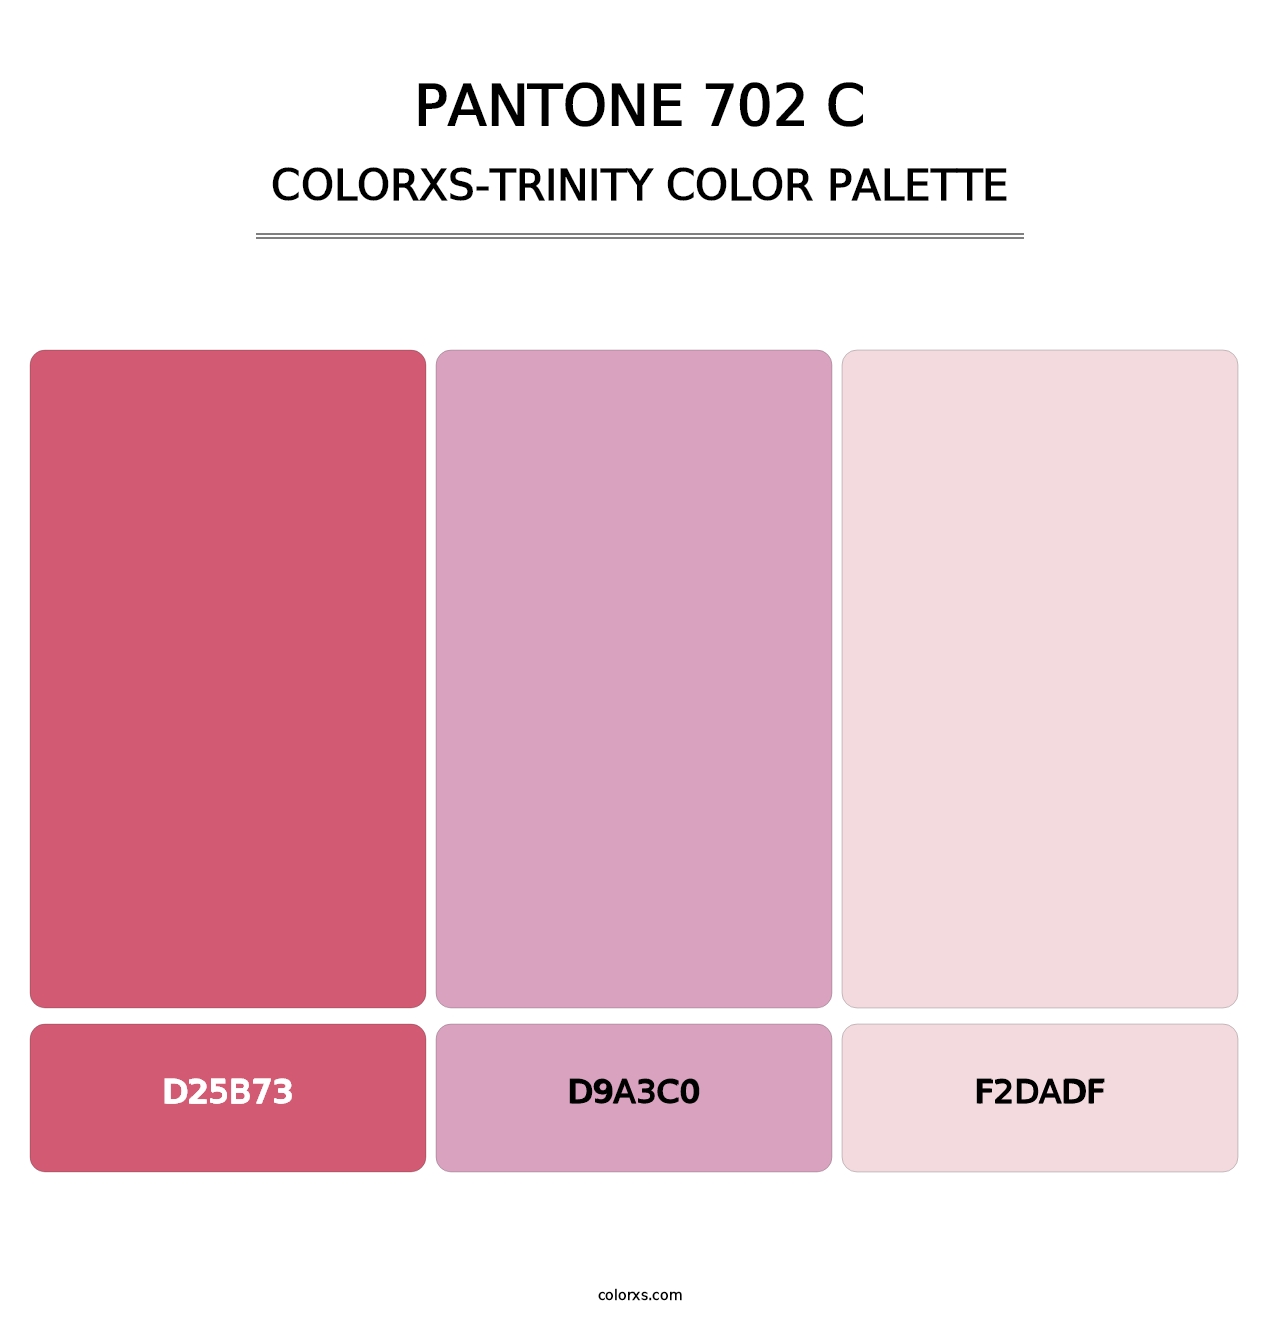 PANTONE 702 C - Colorxs Trinity Palette